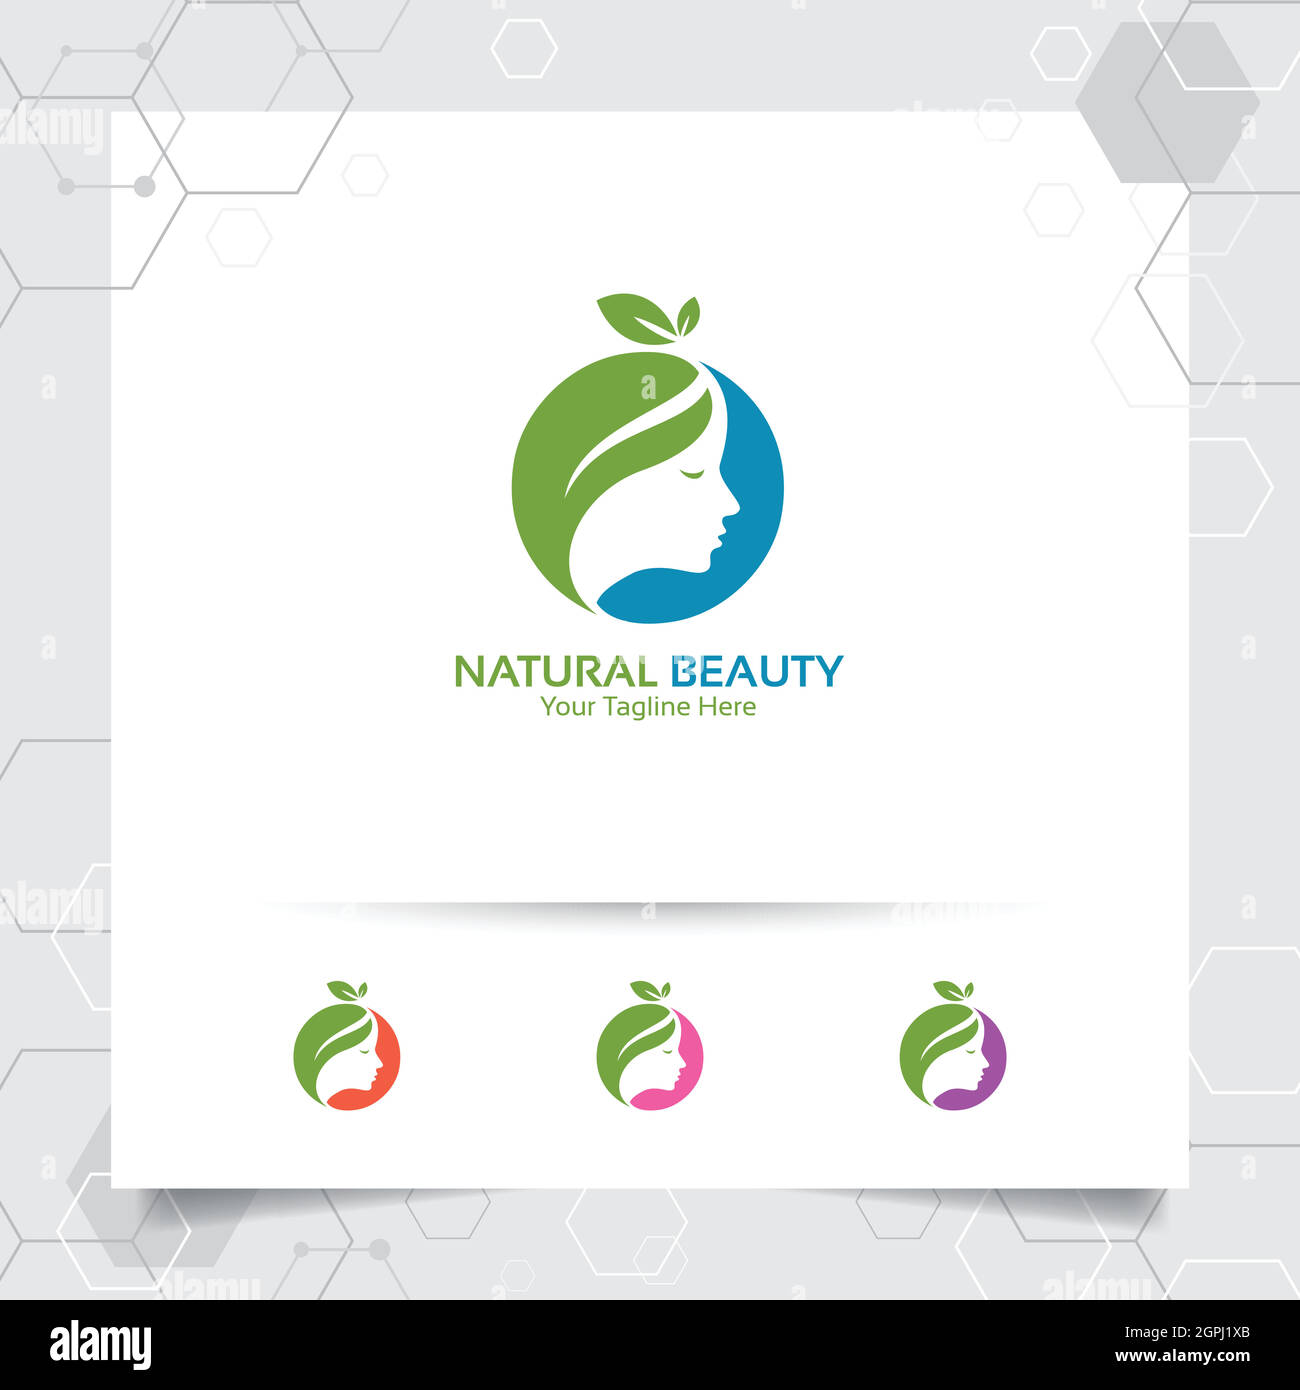 Share 78+ natural beauty logo latest - ceg.edu.vn